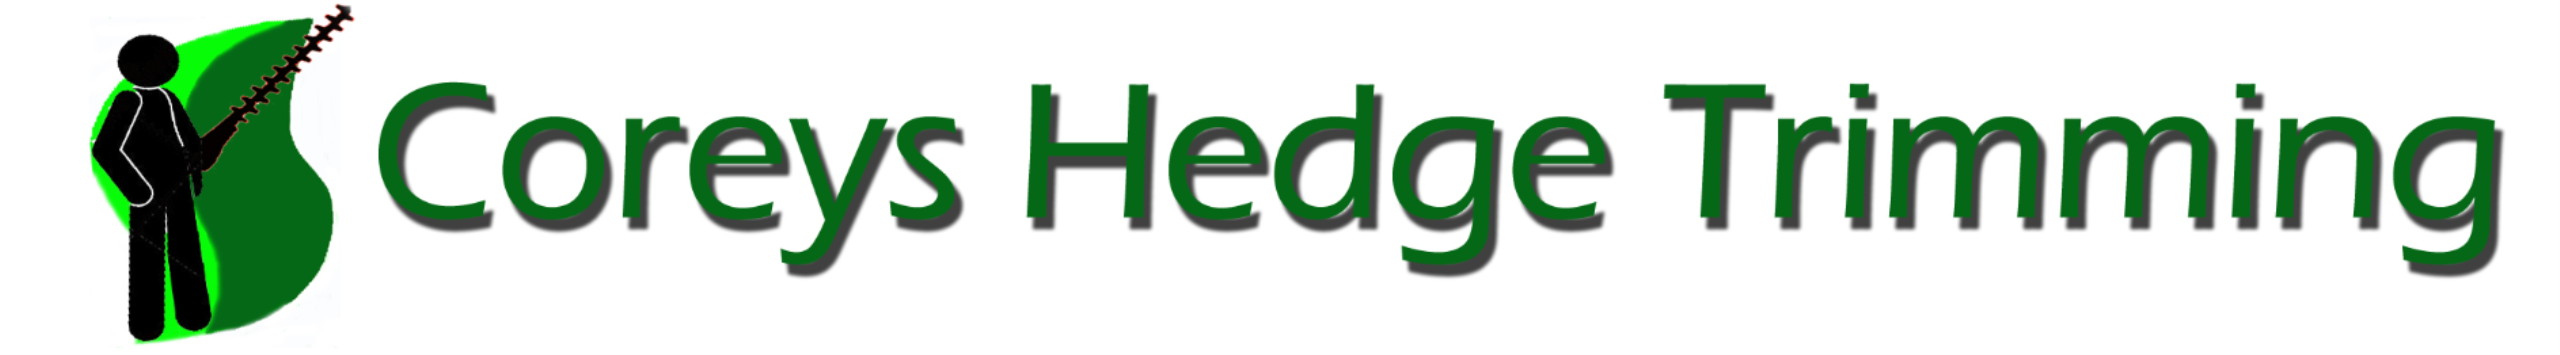 Corey's Hedge Trimming Logo